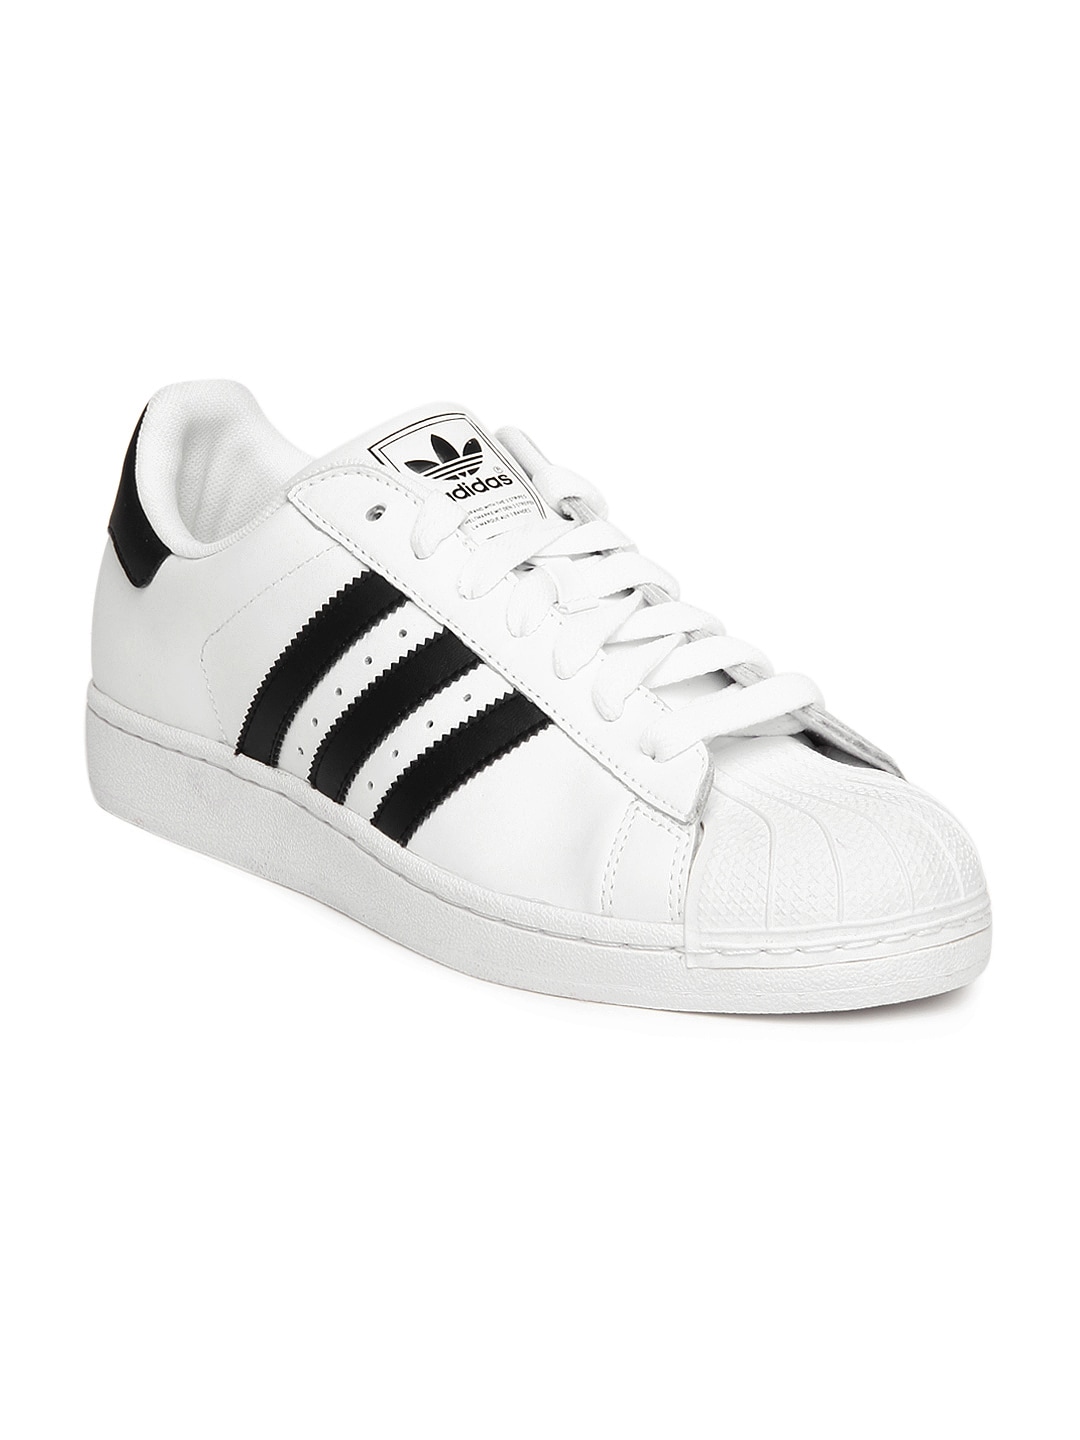 adidas Originals Superstar 2 White Black White Shoeteria